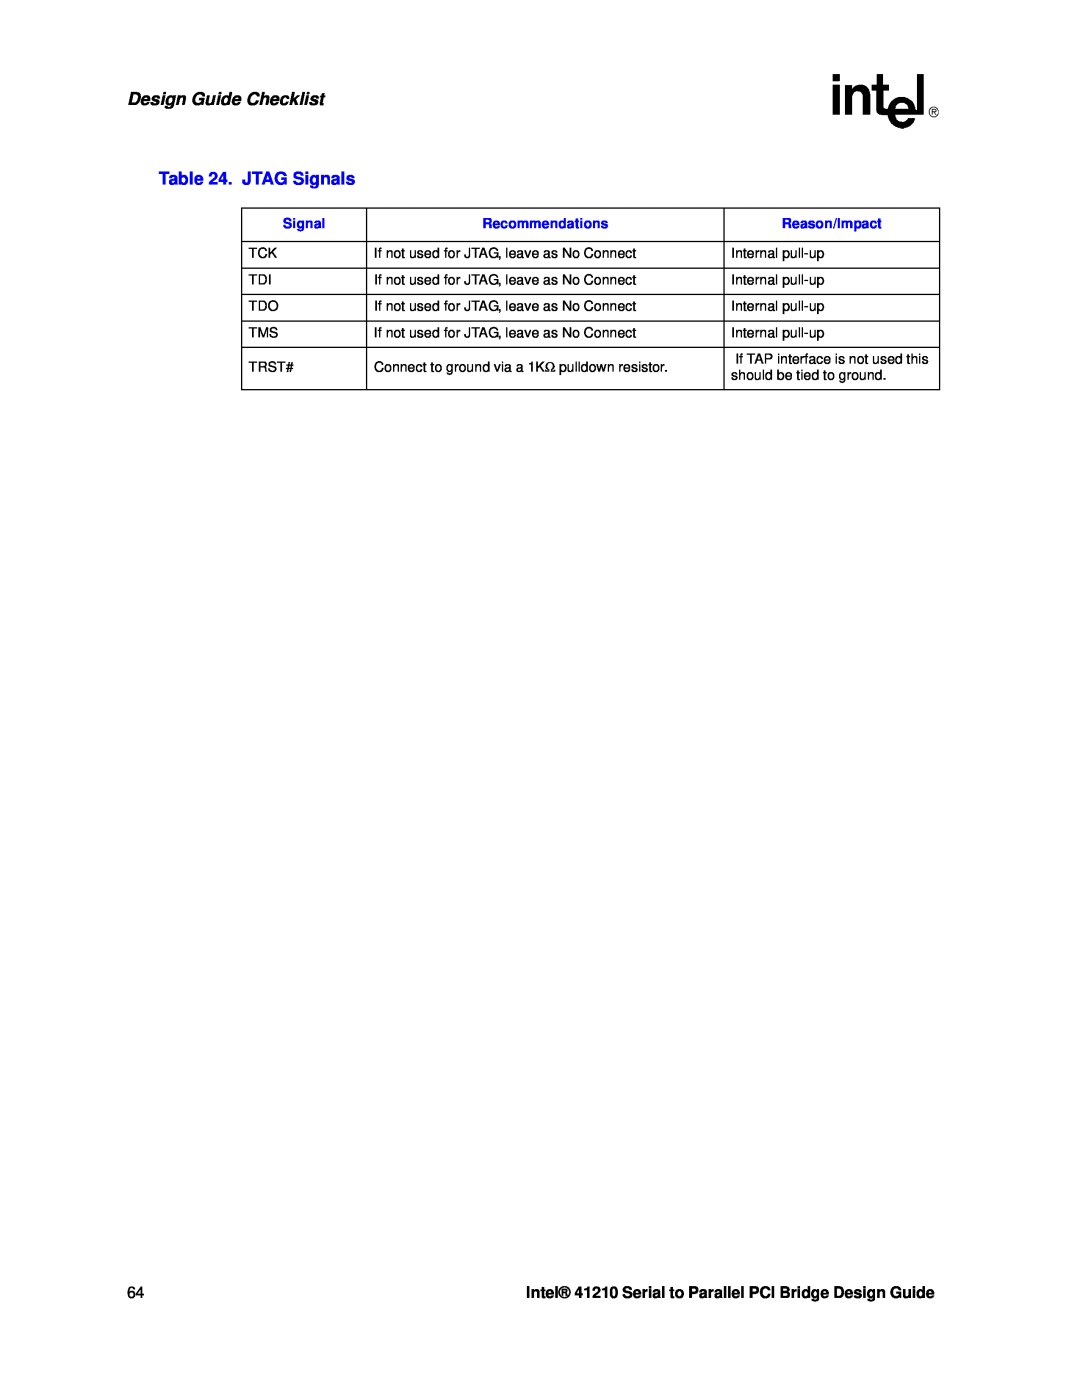 Intel manual JTAG Signals, Design Guide Checklist, Intel 41210 Serial to Parallel PCI Bridge Design Guide 